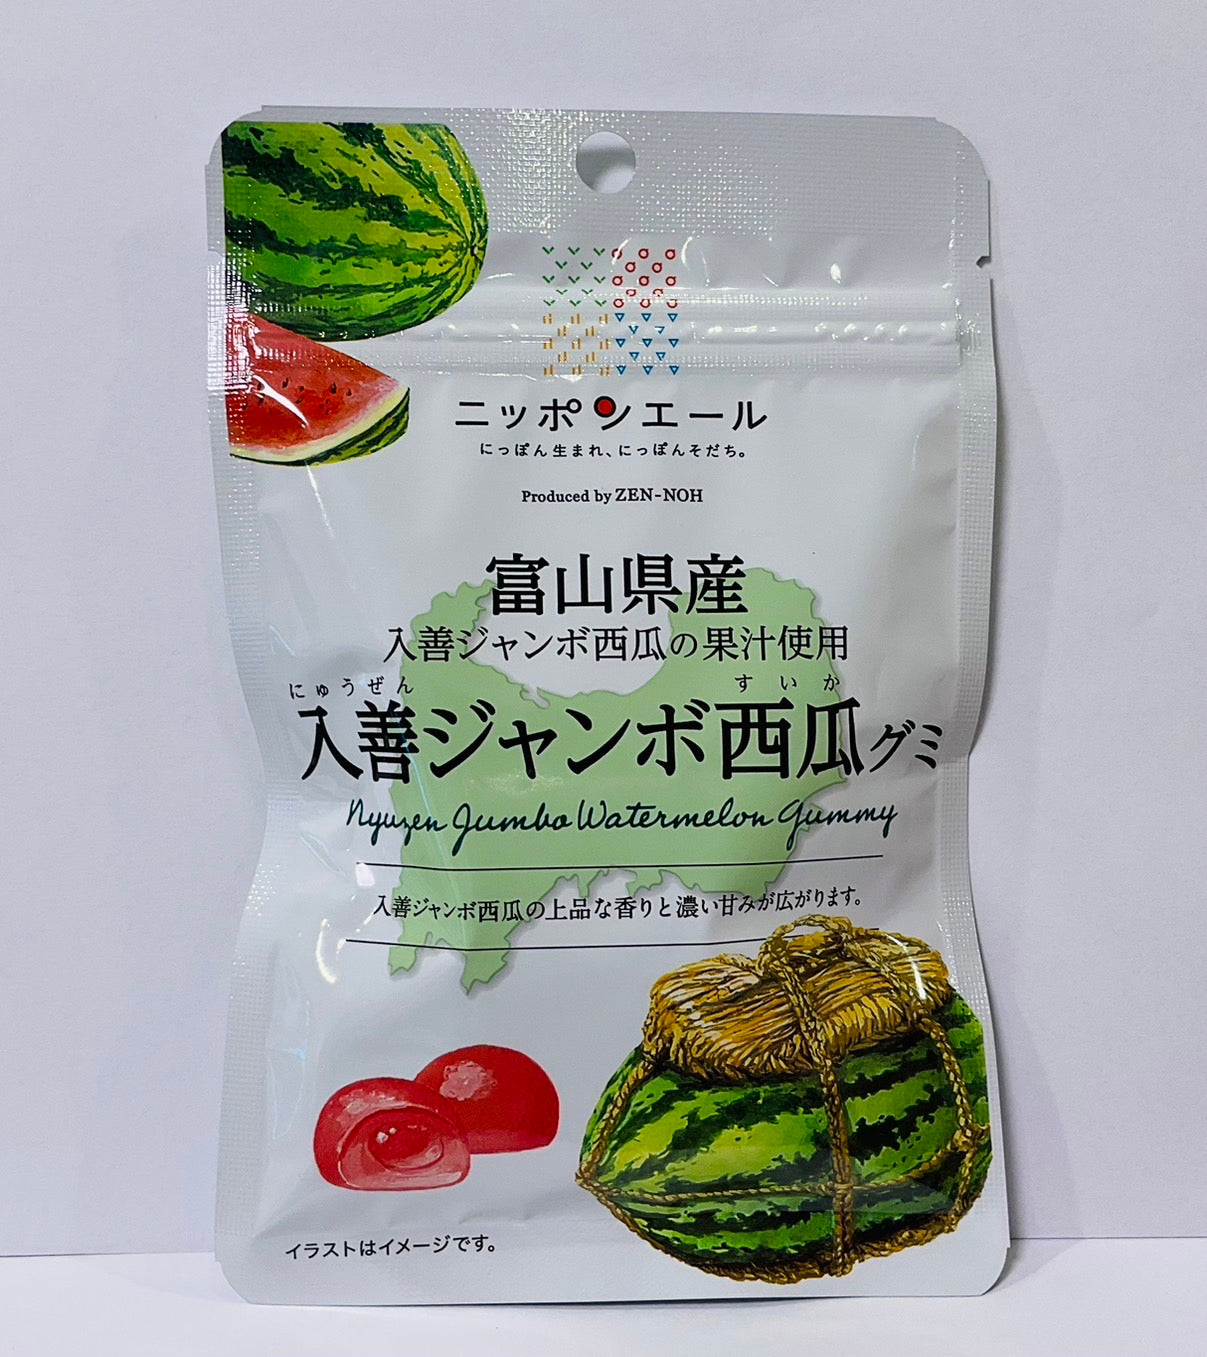 Nyuzen jumbo watermelon gummies from Toyama Prefecture